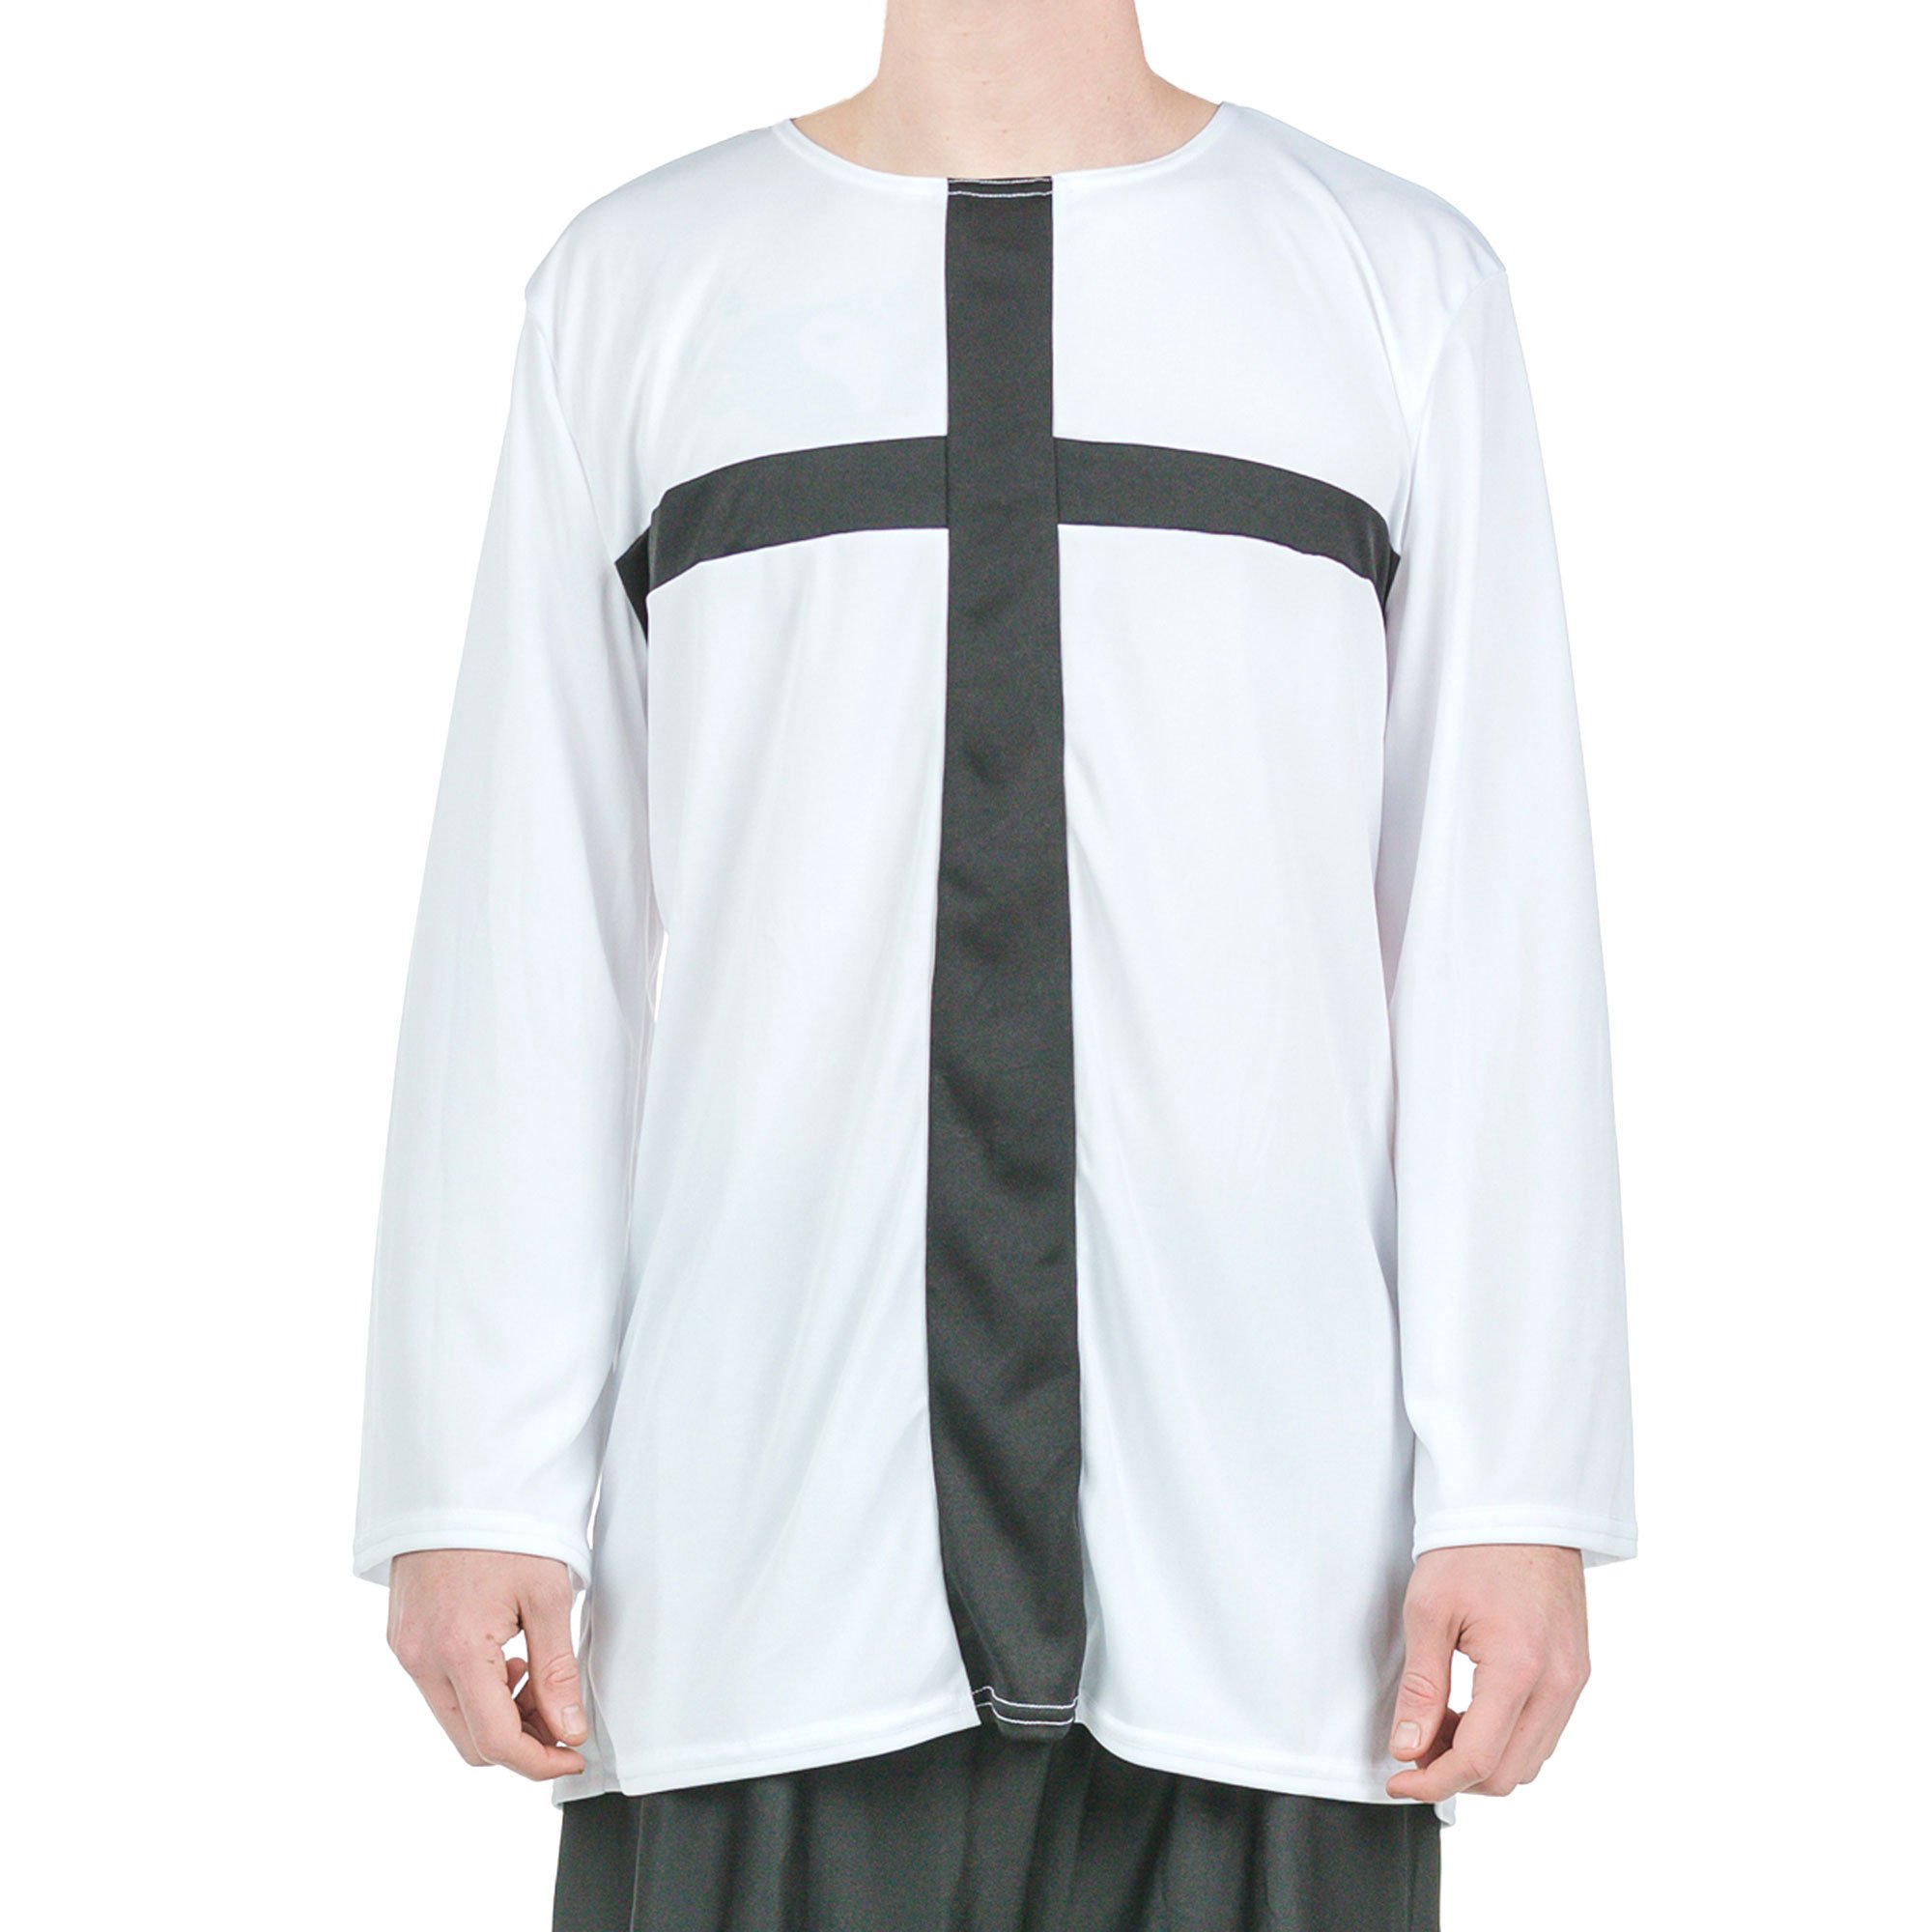 Danzcue Praise Cross Inspired Tunic - Click Image to Close